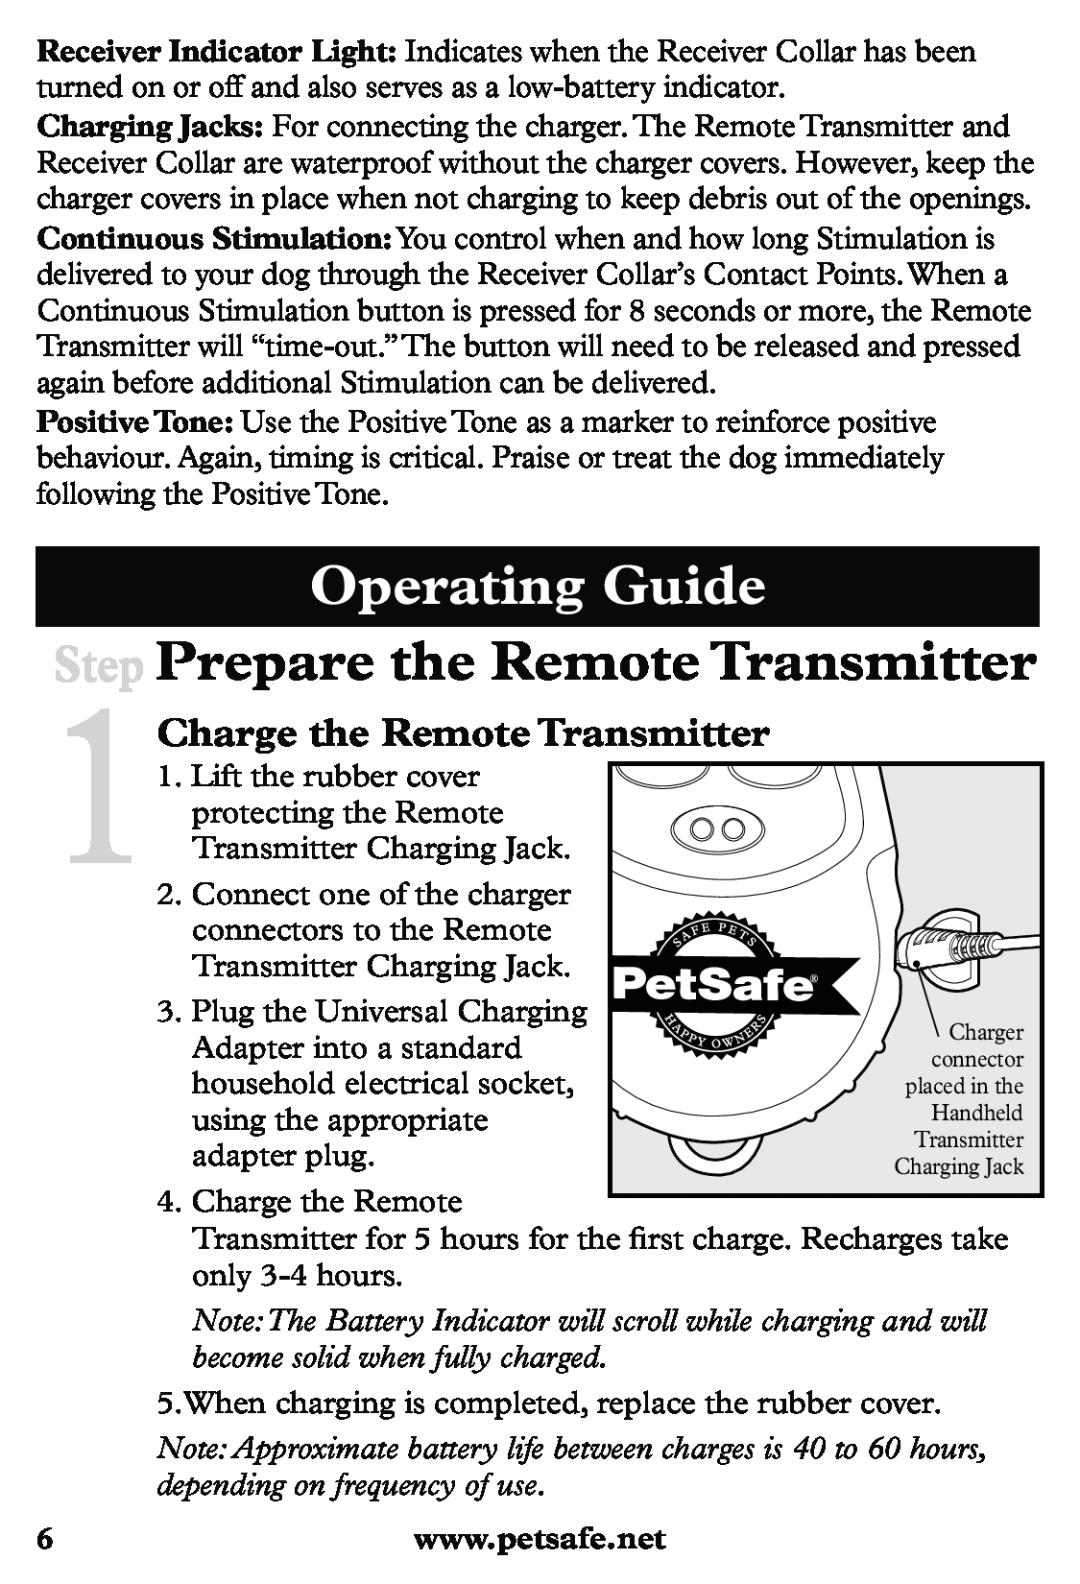 Petsafe PDT20-11939 manuel dutilisation Operating Guide, Step Prepare the Remote Transmitter, Charge the Remote Transmitter 